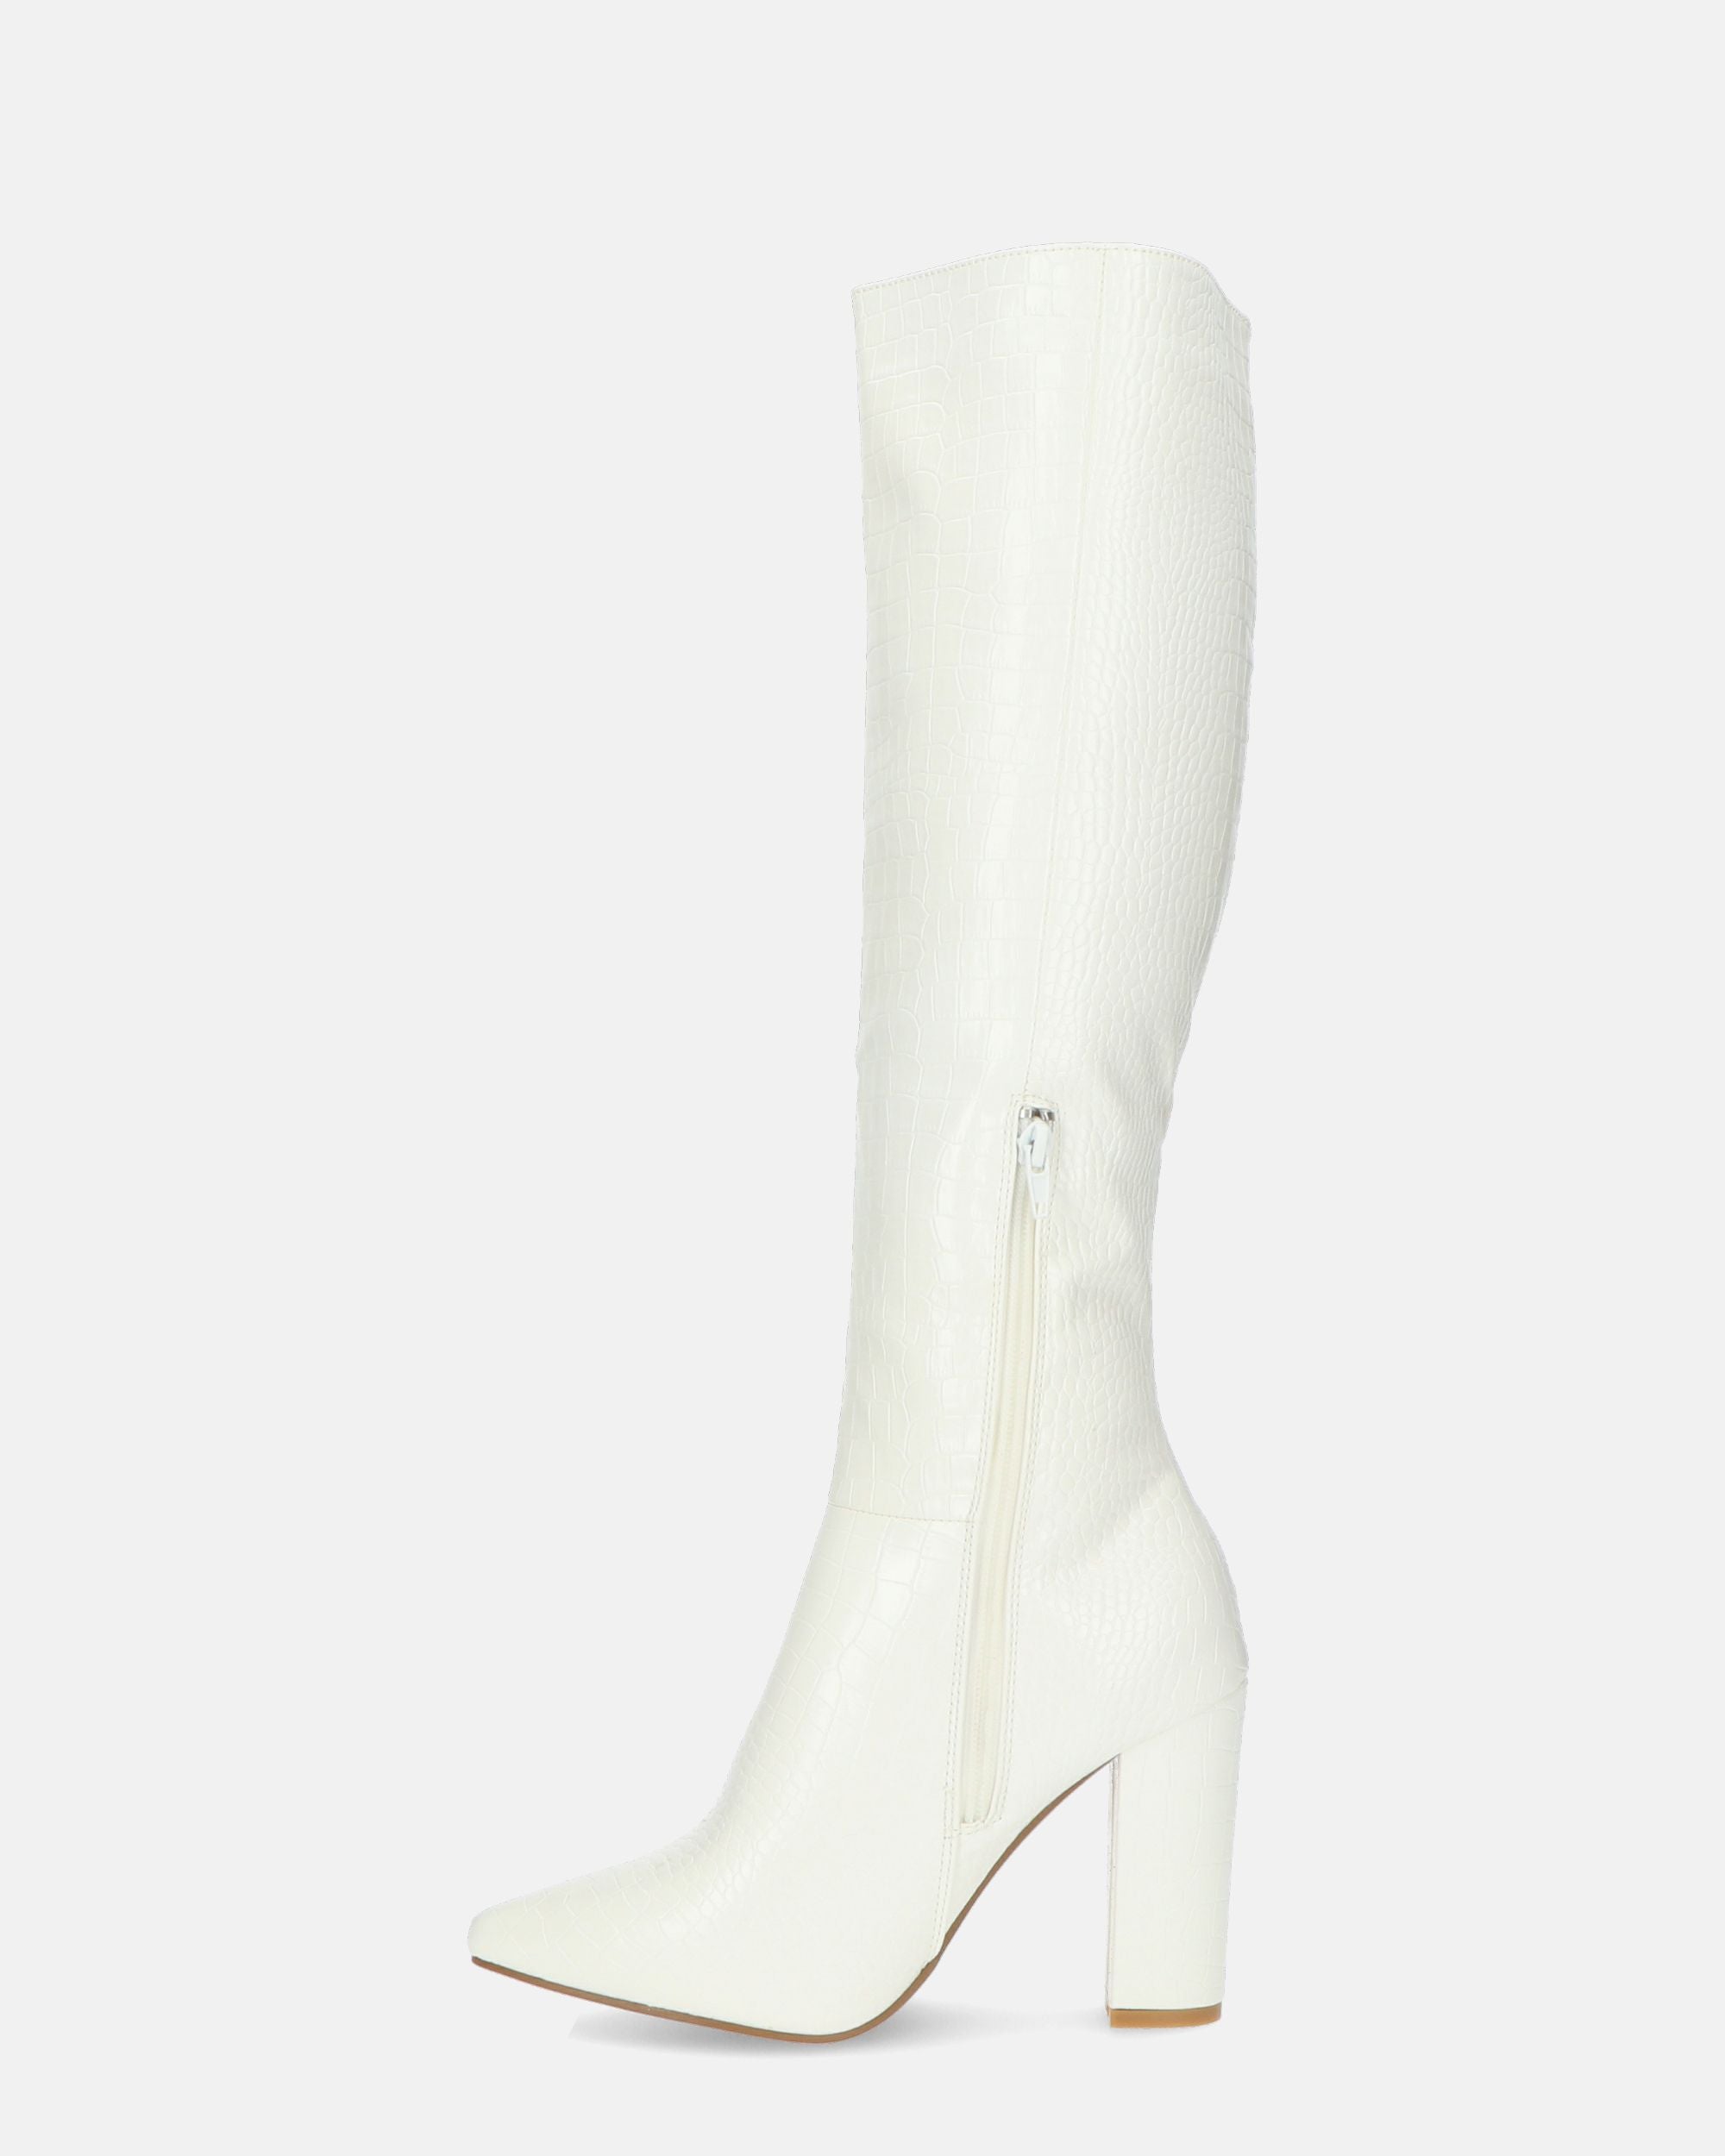 KSENIA - white crocodile high boots